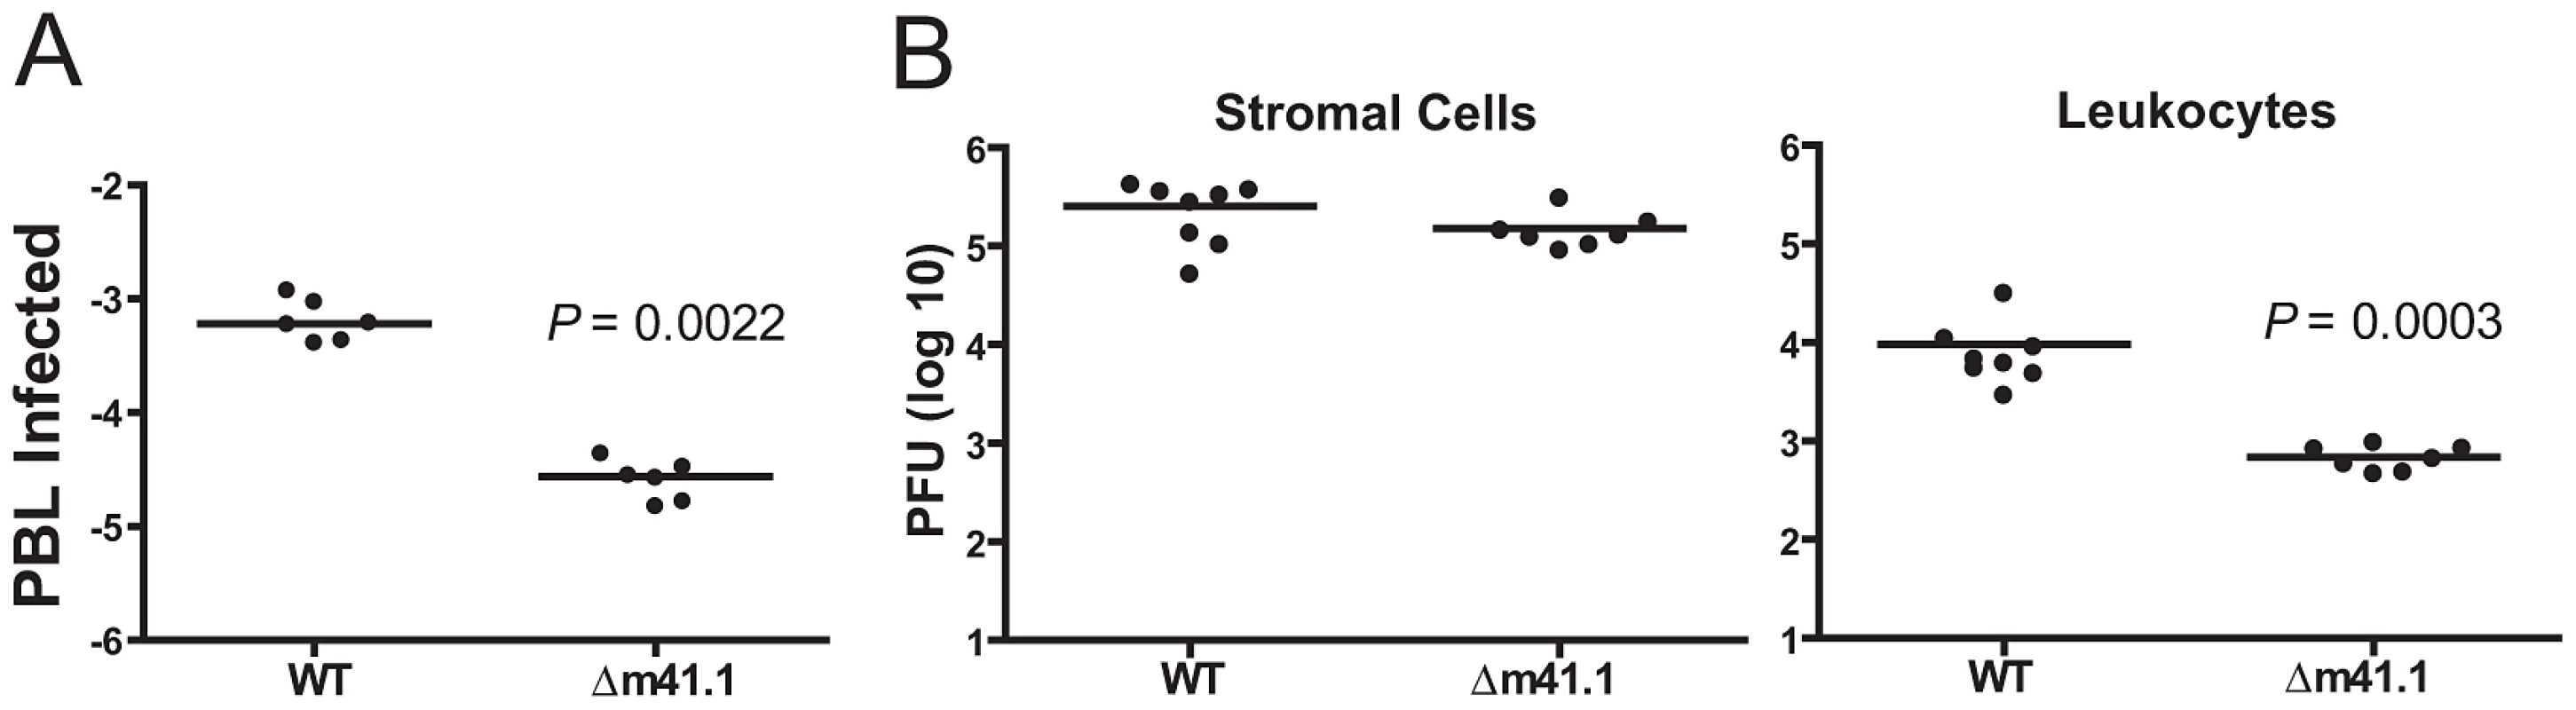 m41.1 enhances viral replication in leukocytes.